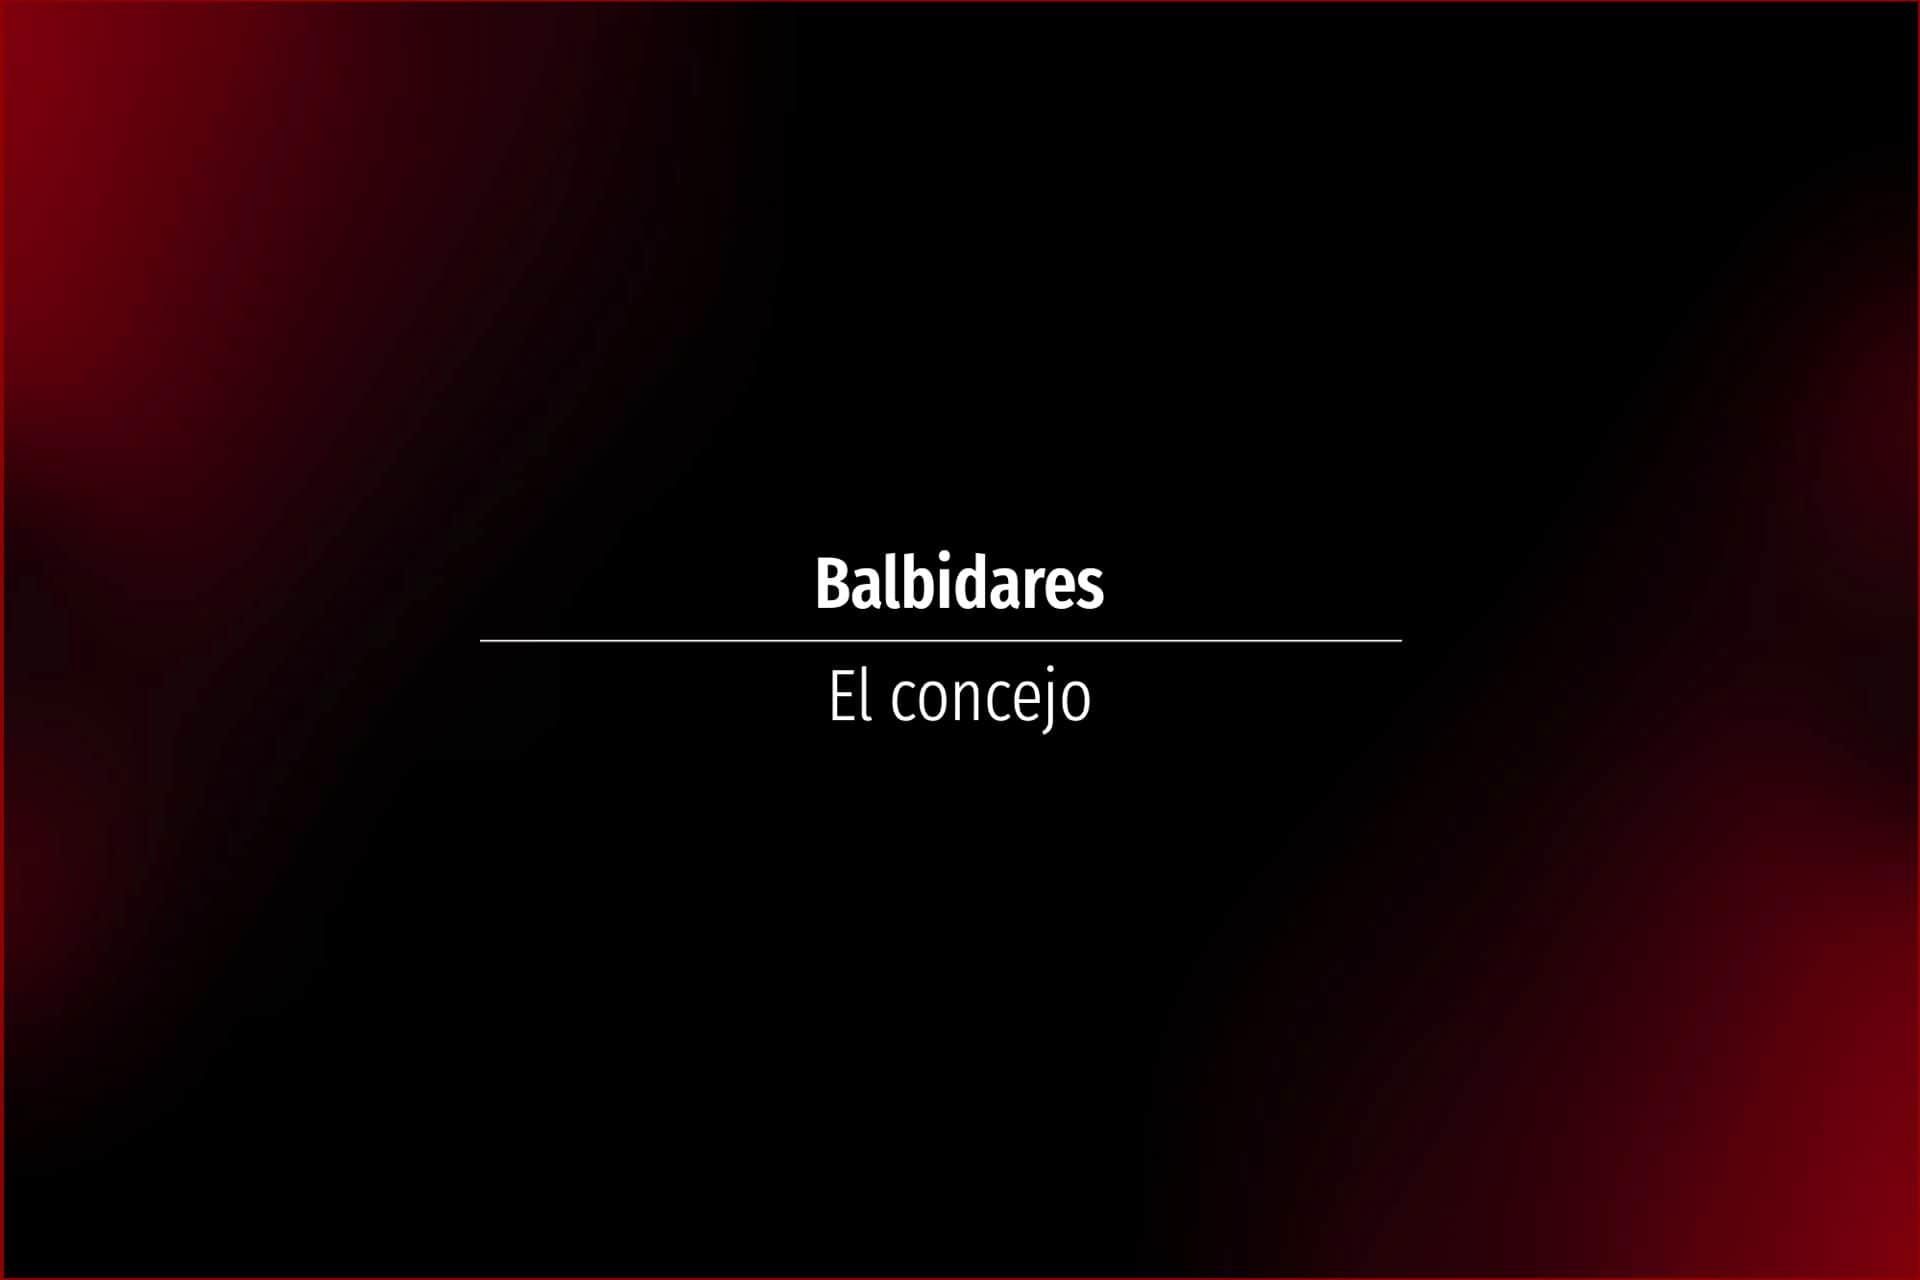 Balbidares